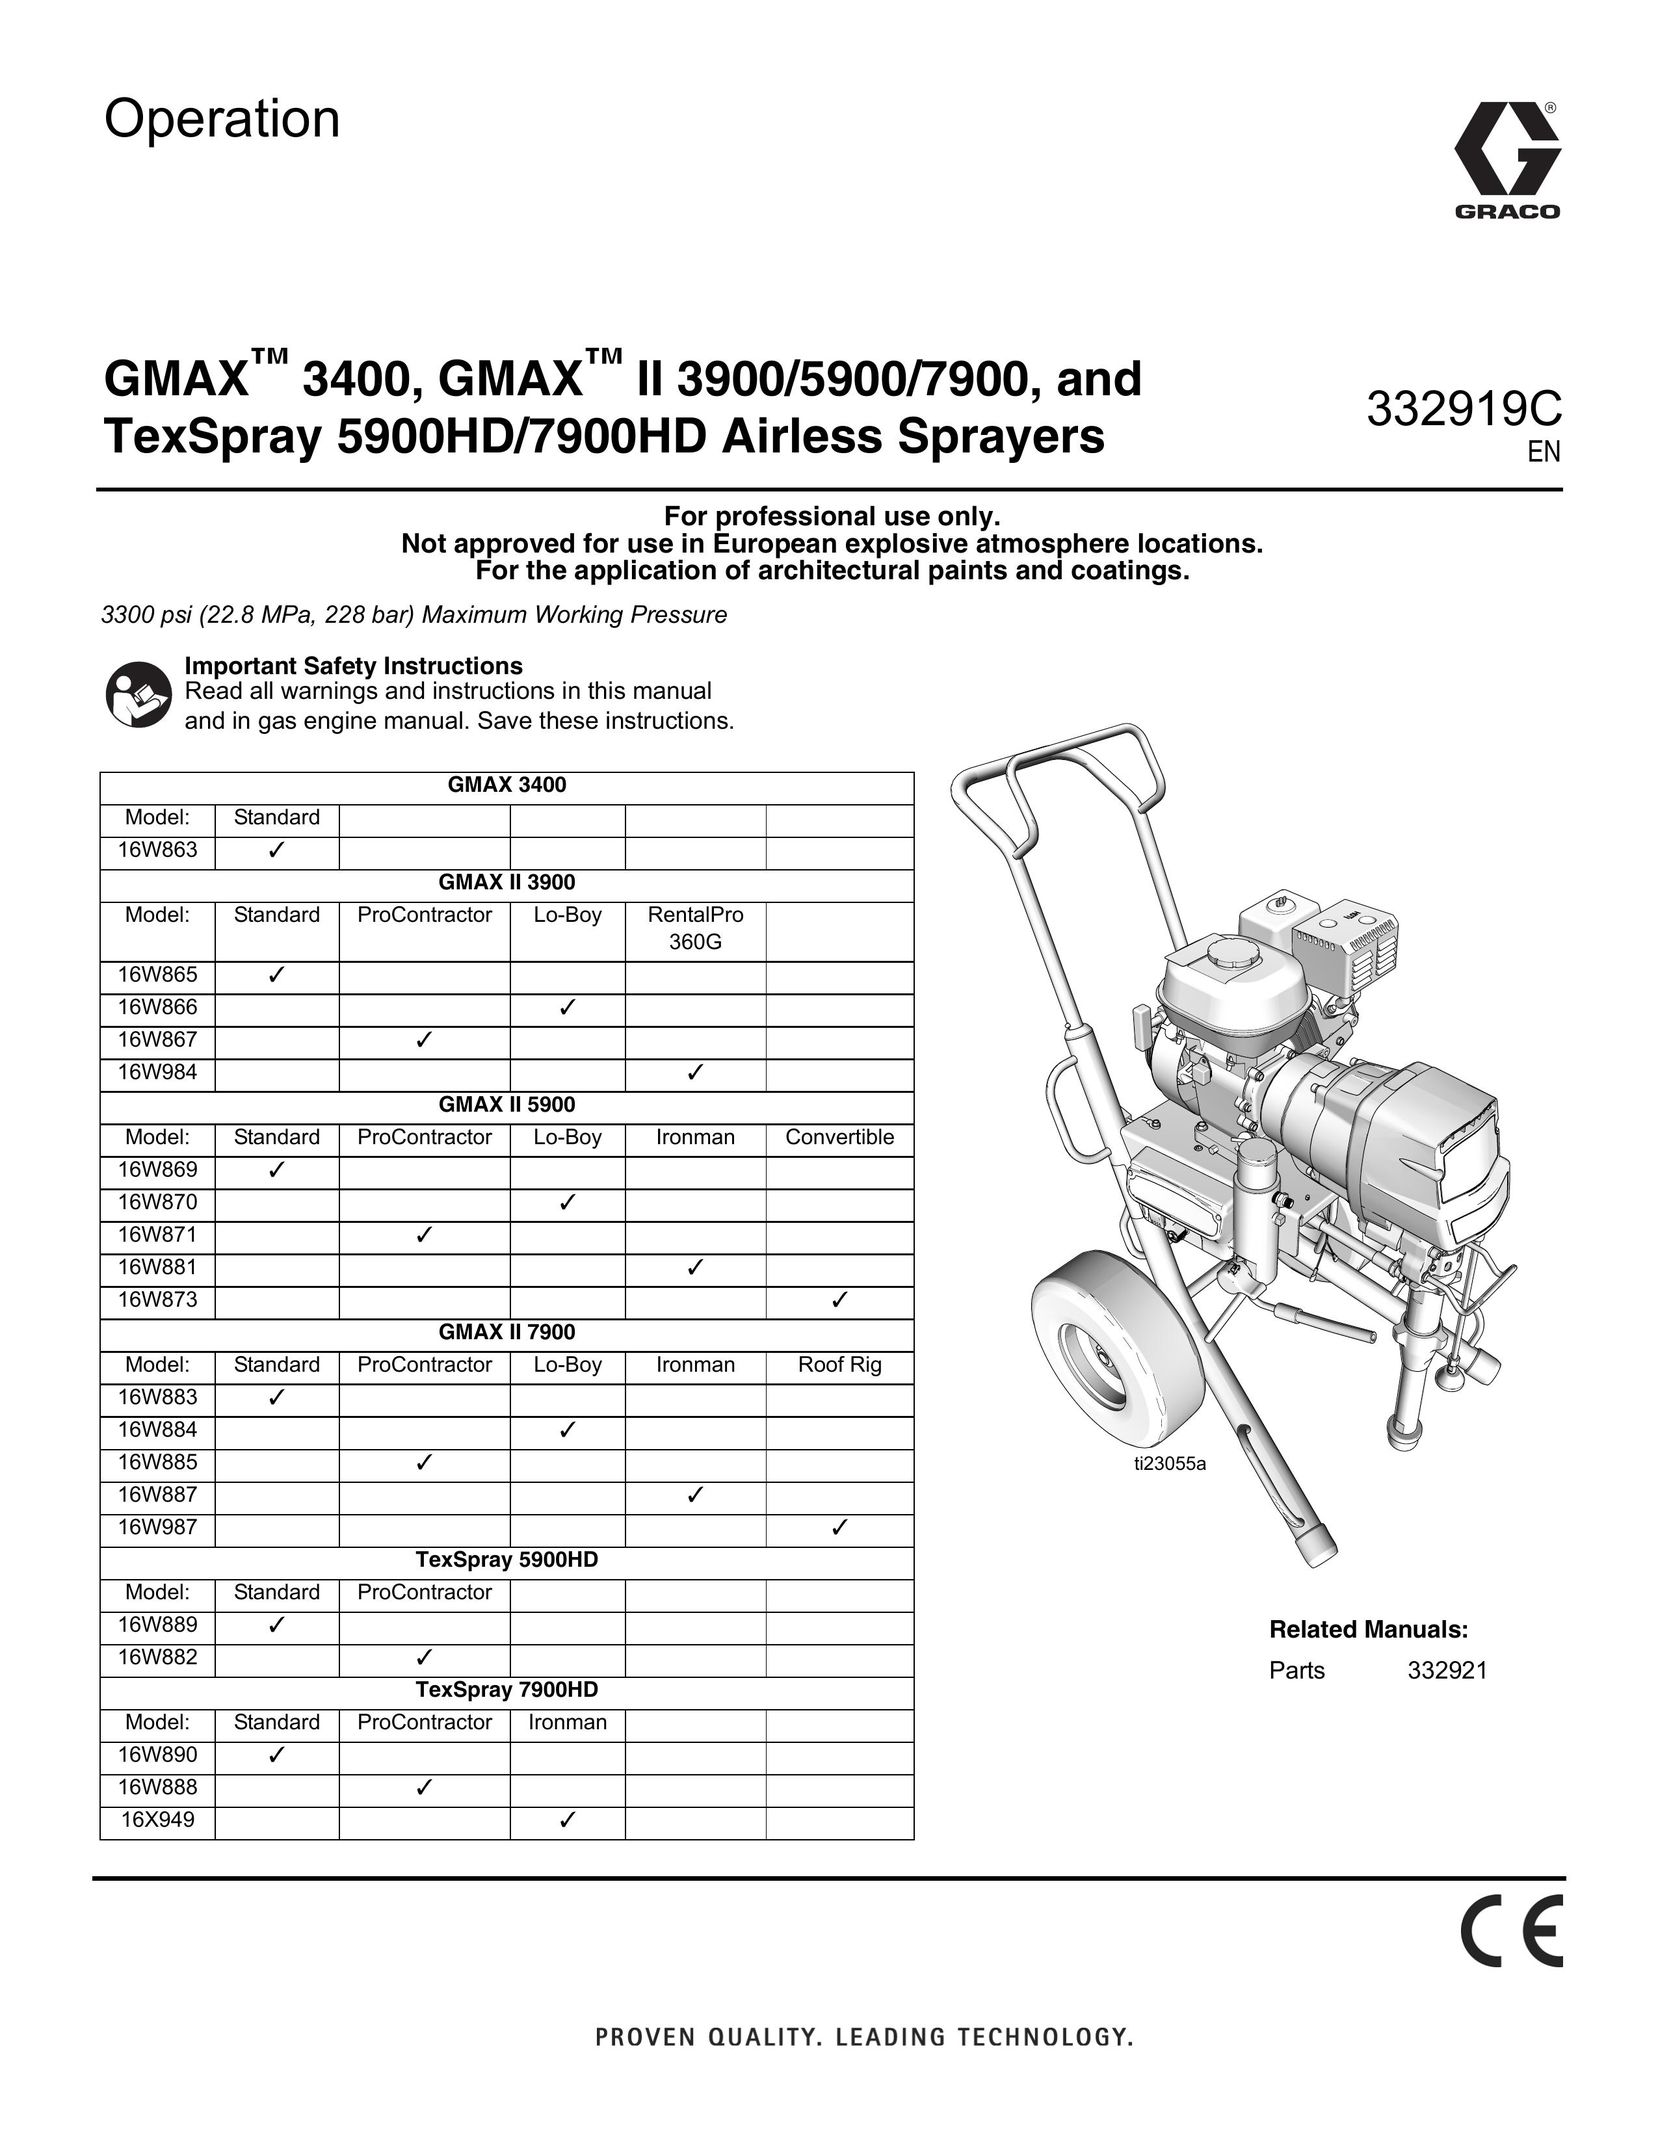 Graco 16W987 Paint Sprayer User Manual